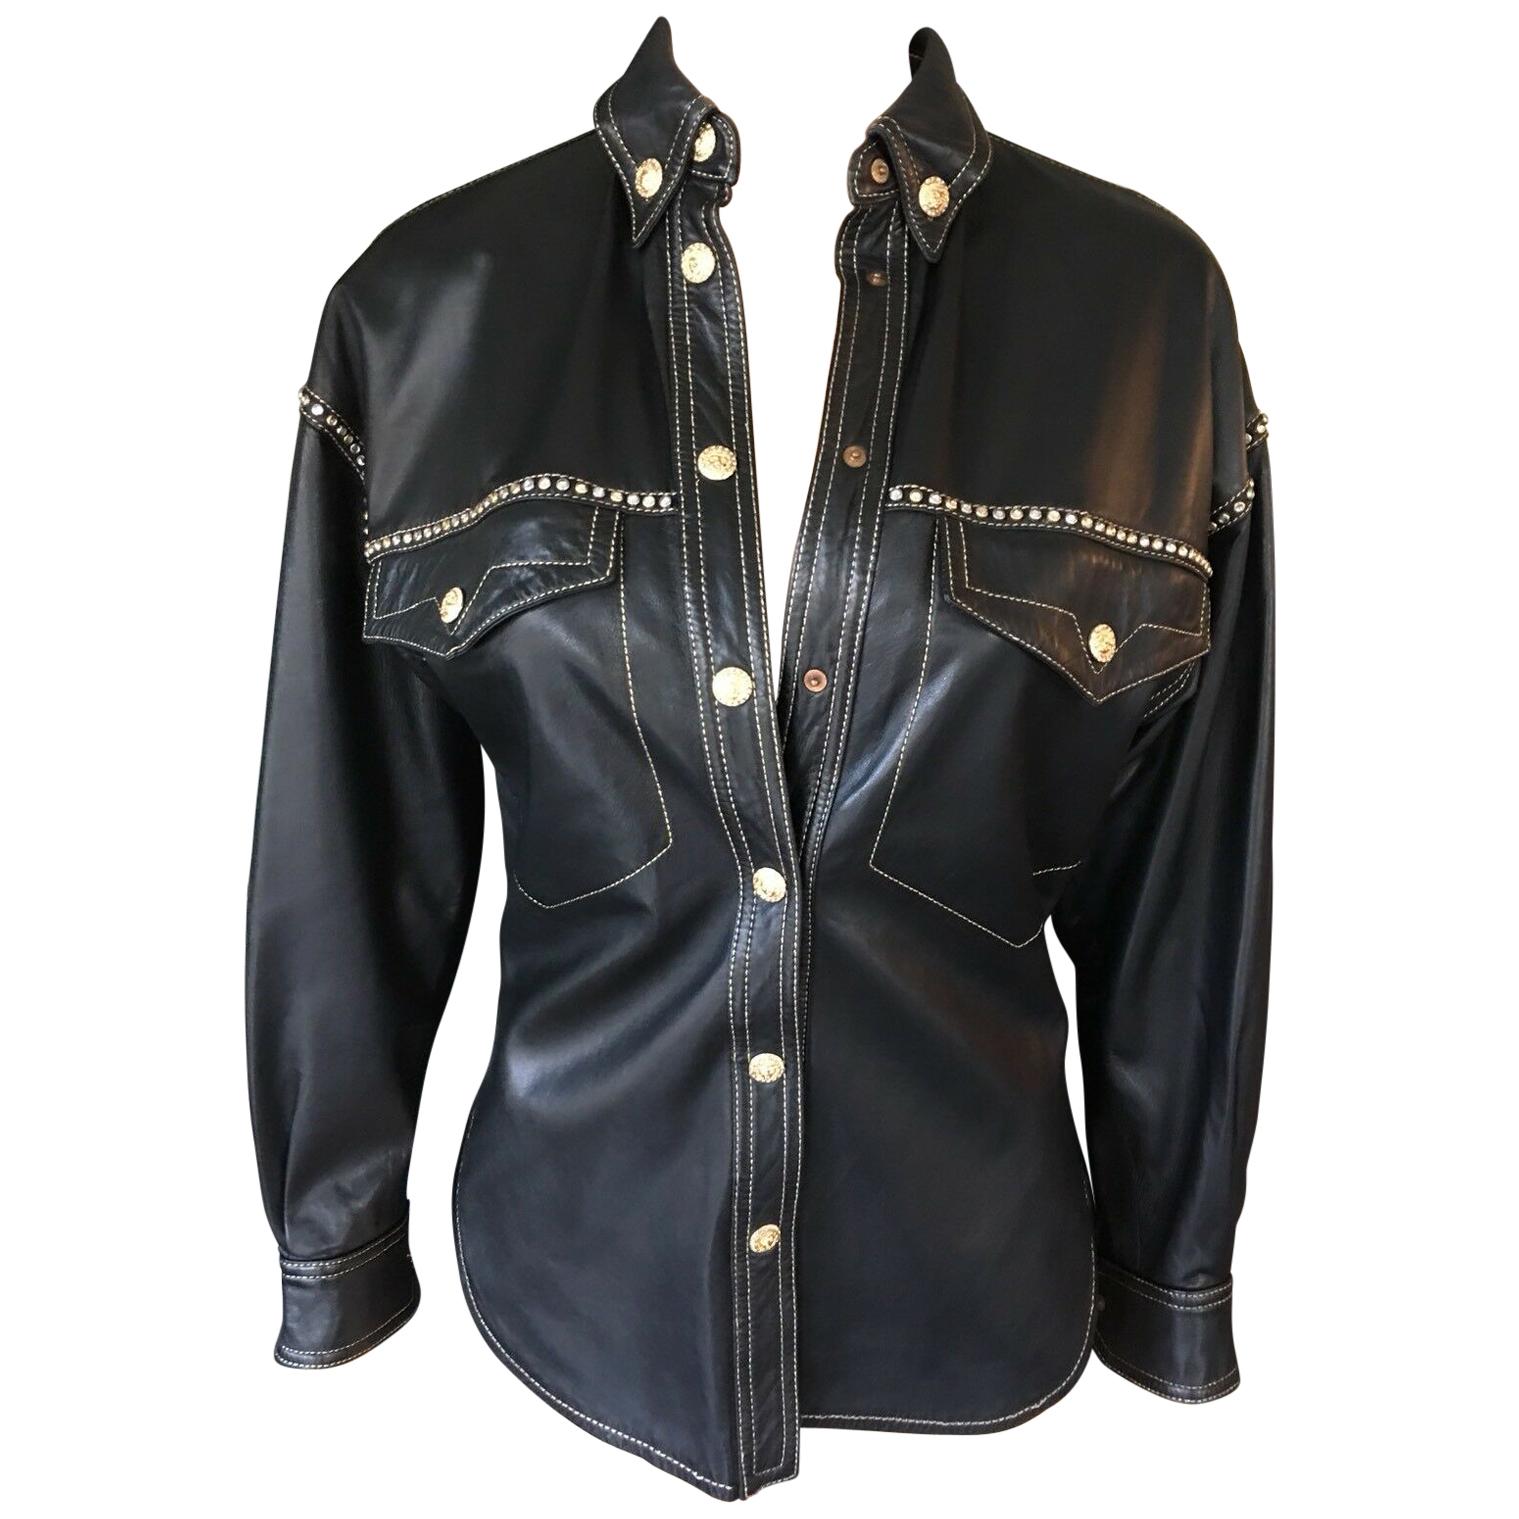 versace leather shirt